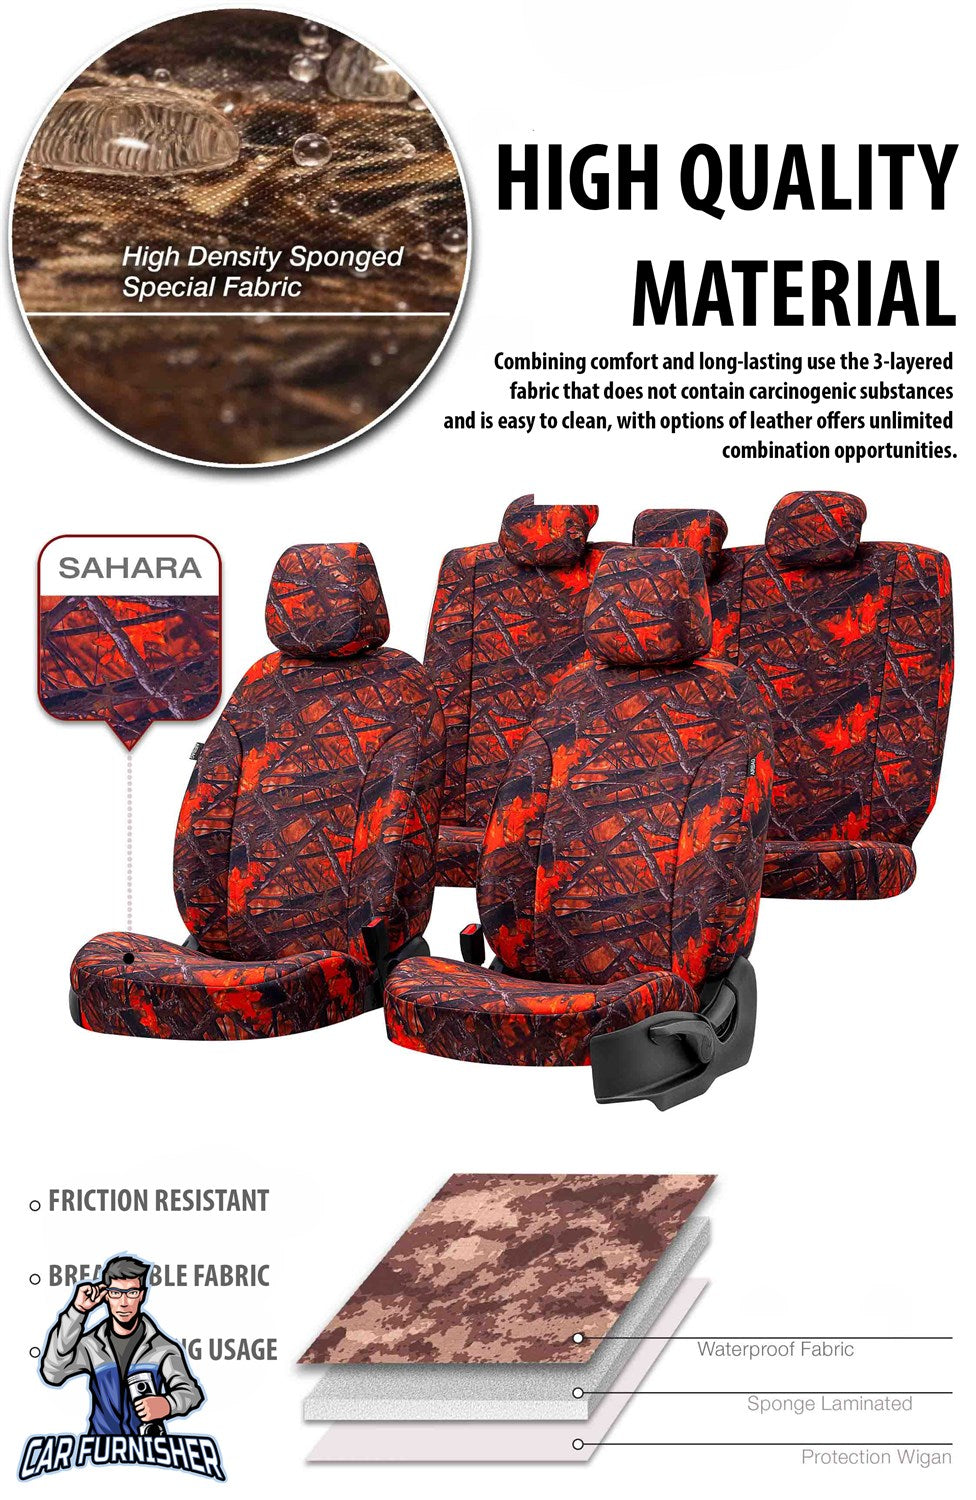 Daewoo Tacuma Seat Covers Camouflage Waterproof Design Himalayan Camo Waterproof Fabric